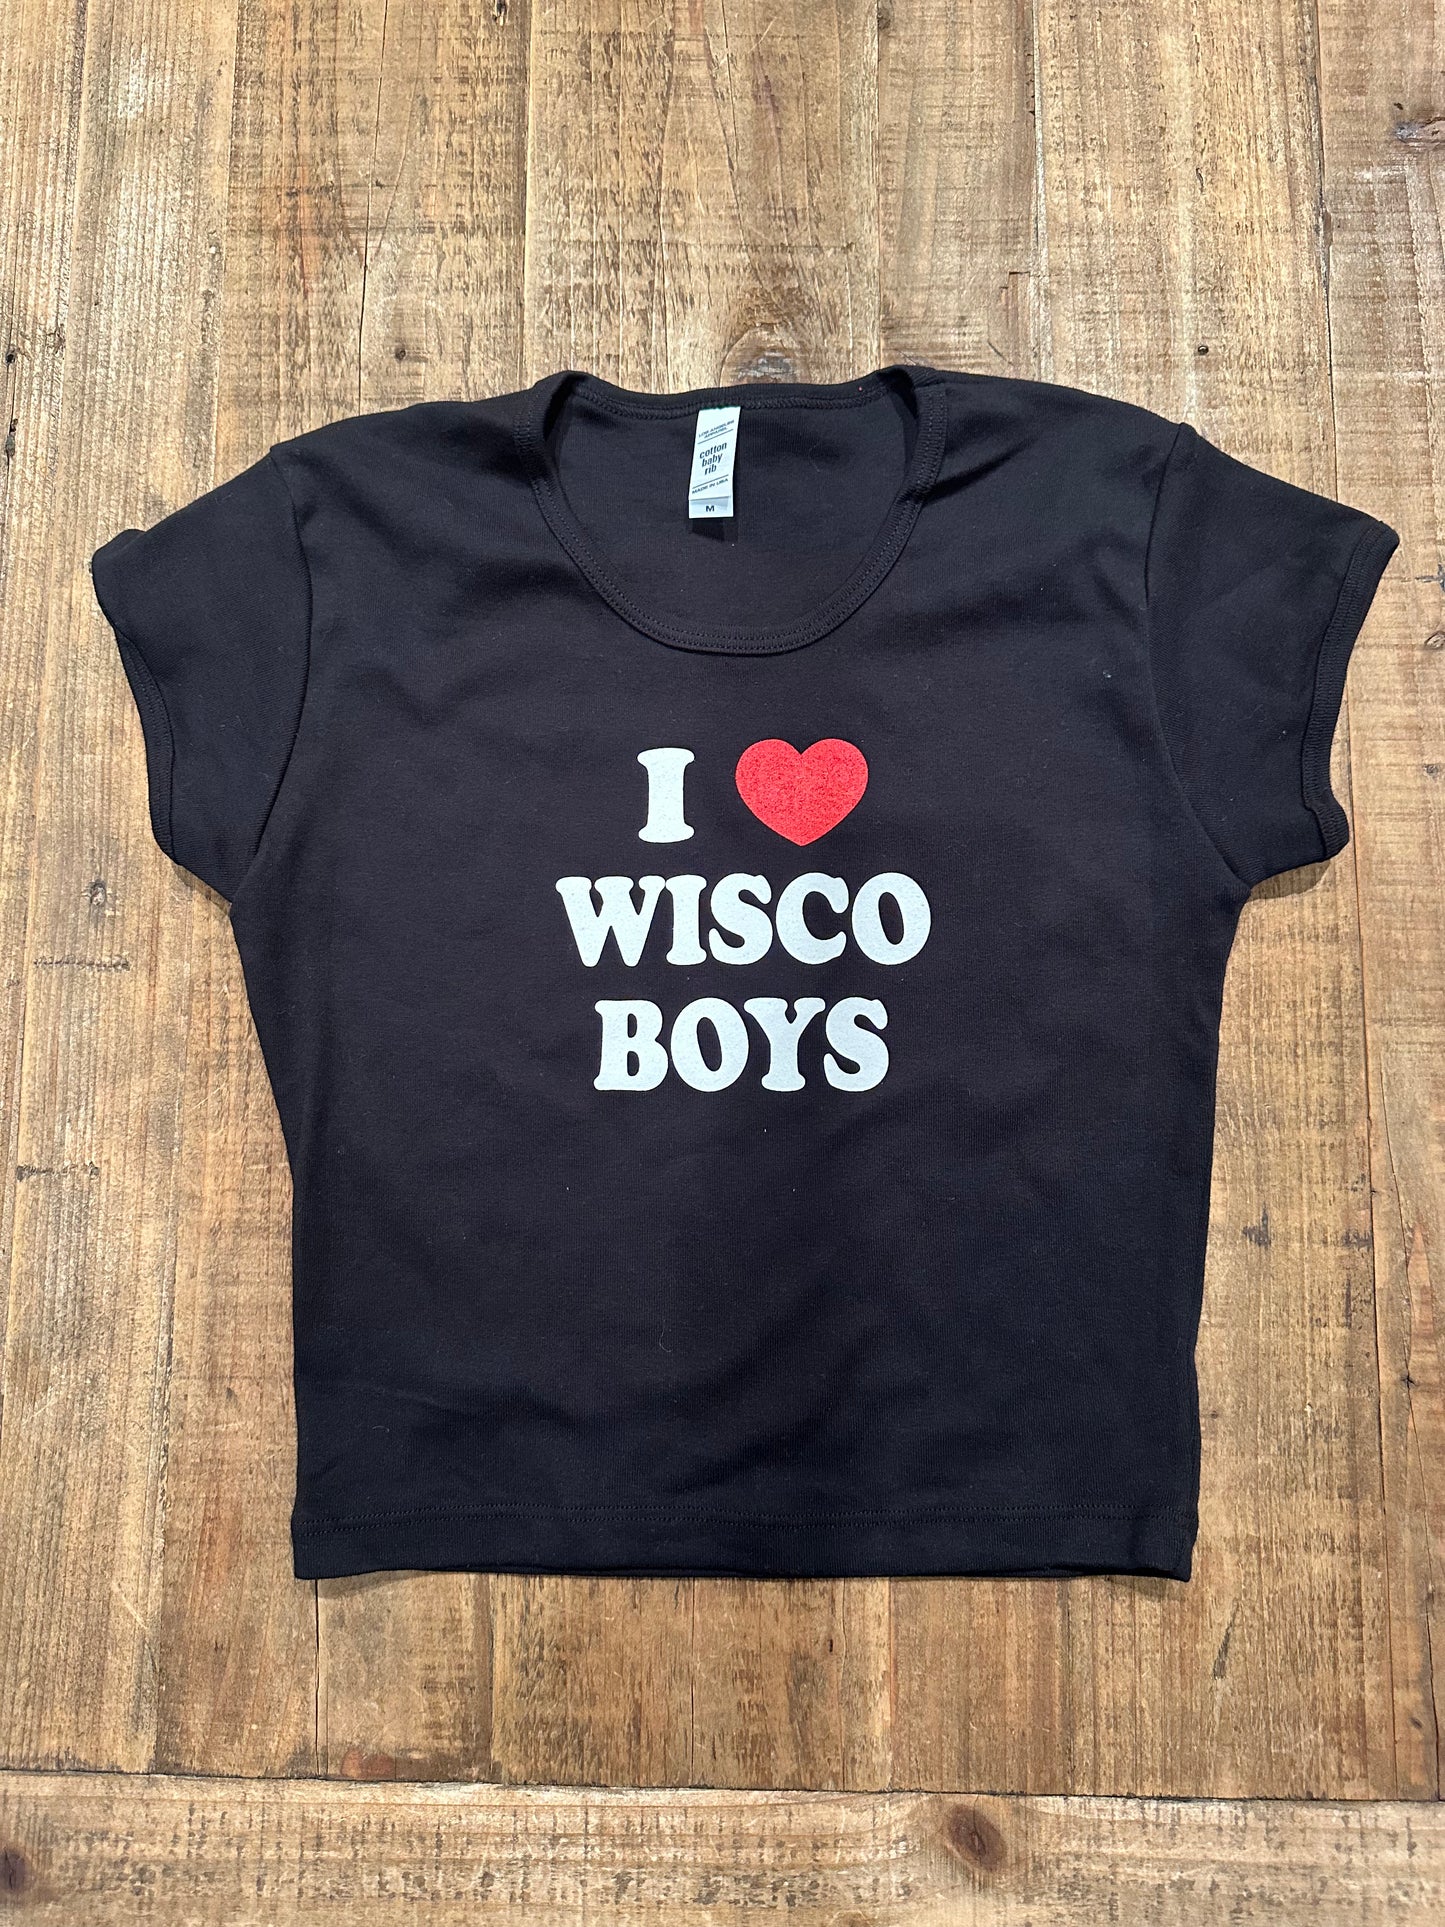 Wisco Boys Baby Tee